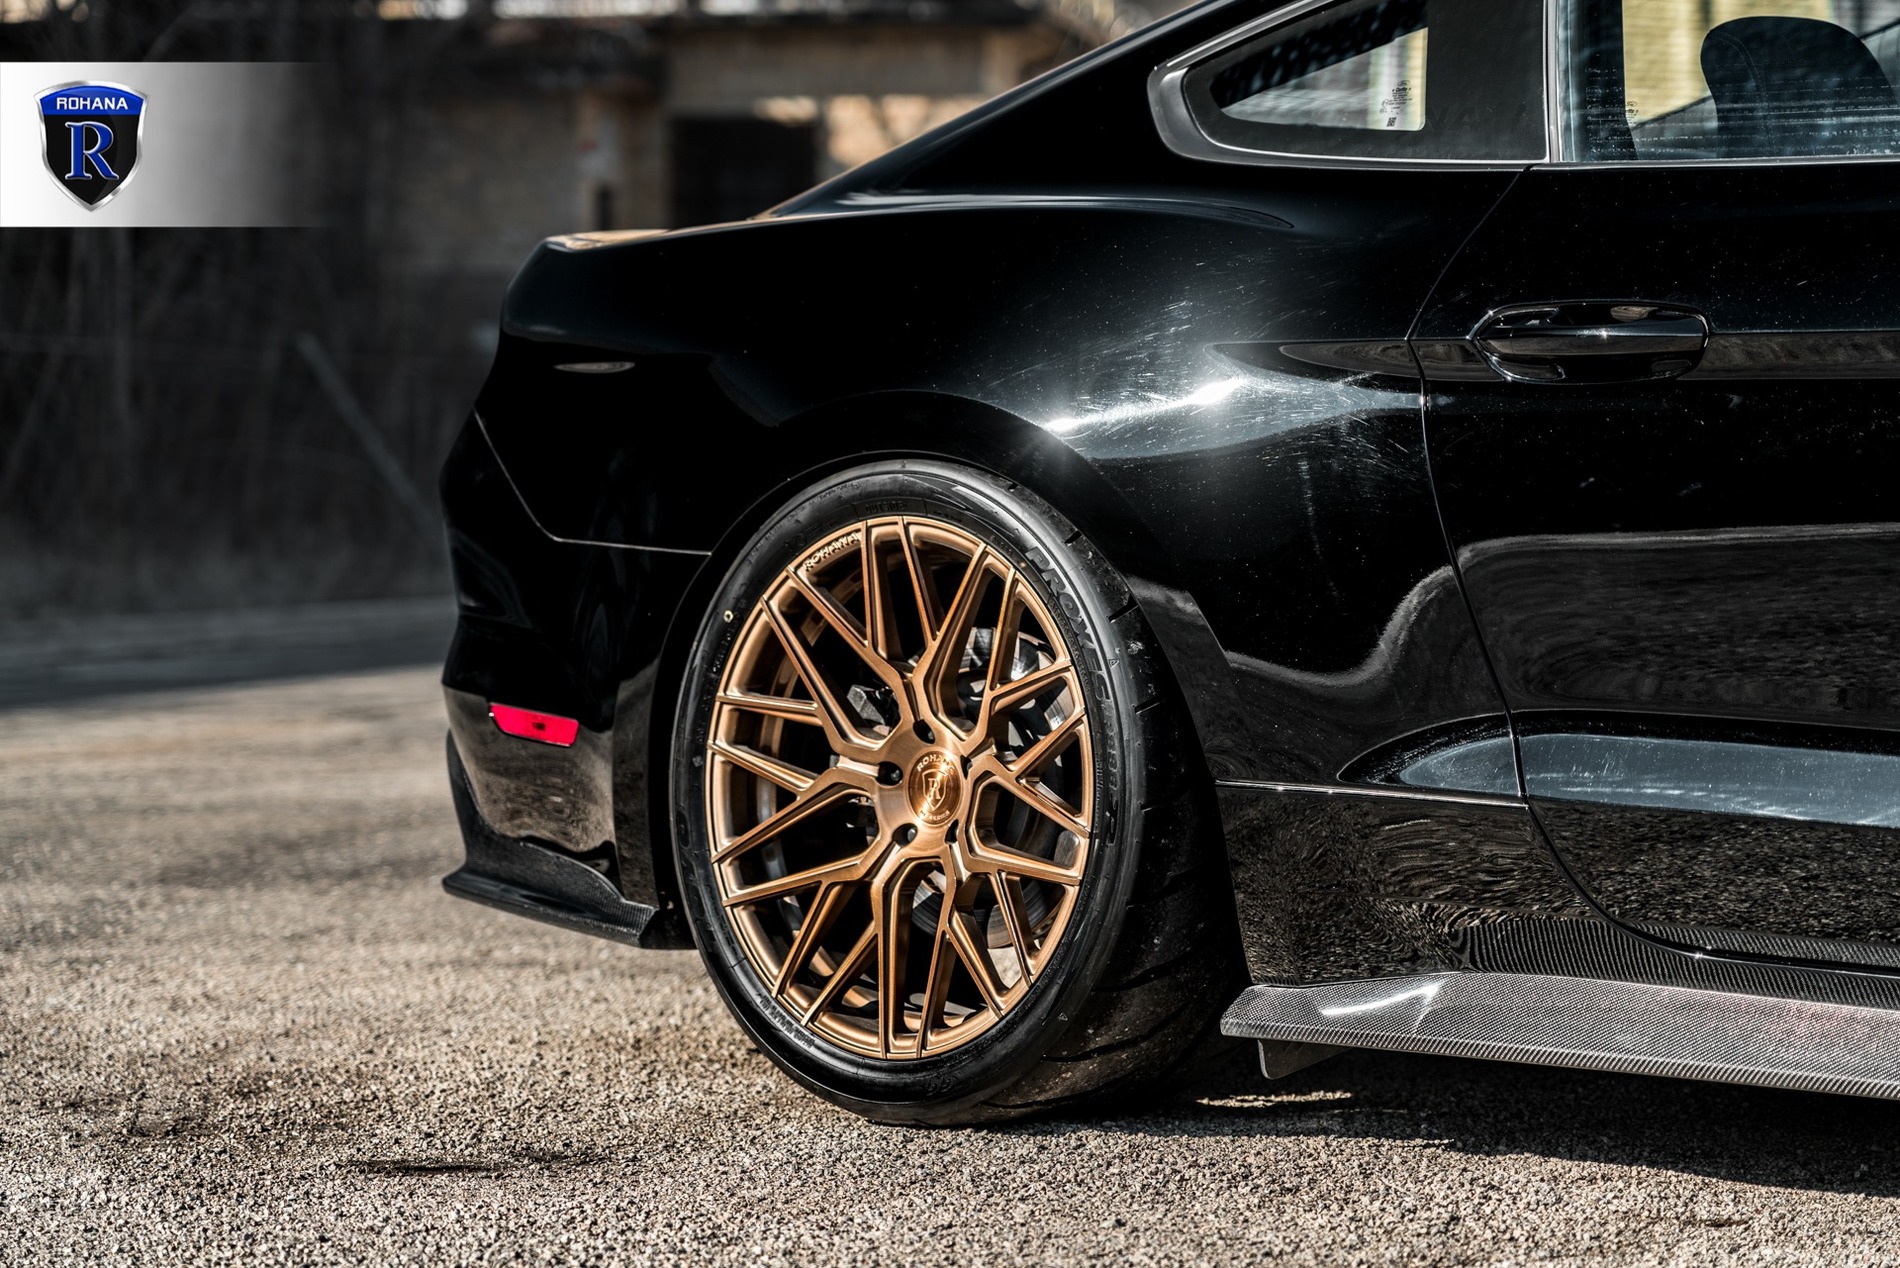 shadow-black-ford-mustang-rohana-rfx10-brushed-bronze-concave-wheels.jpg